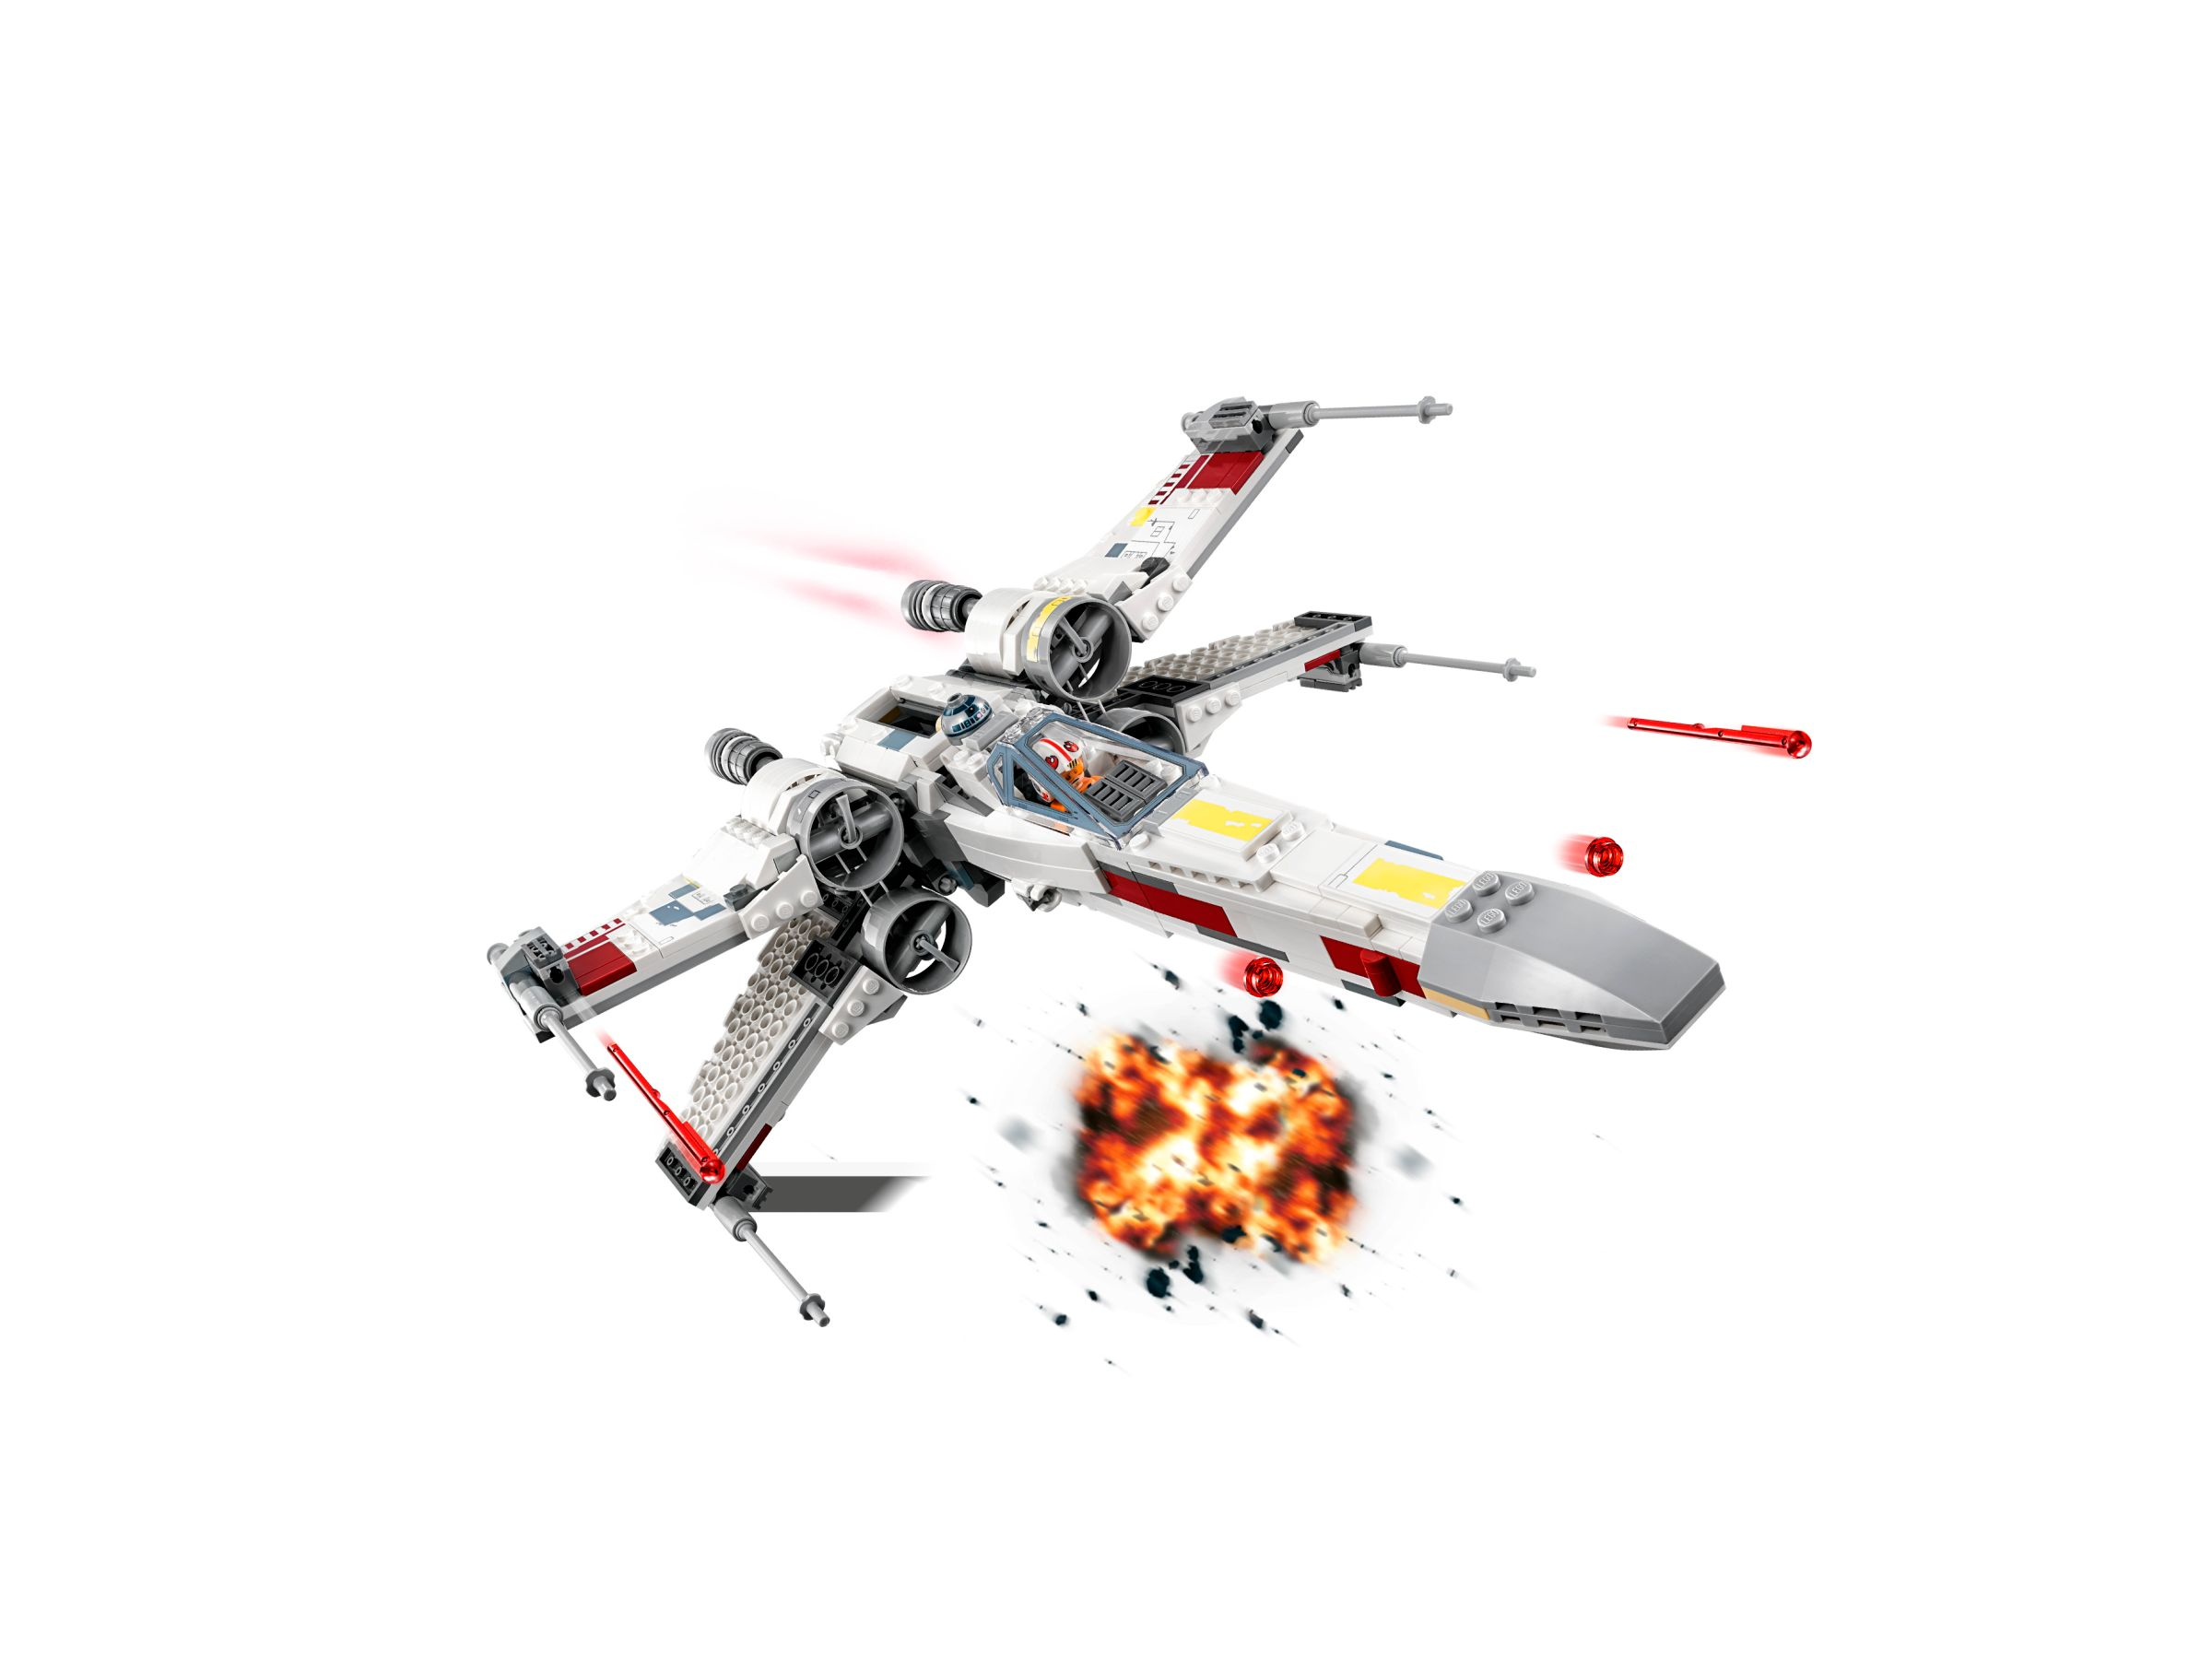 LEGO 75218 X-Wing Starfighter™ Bausatz